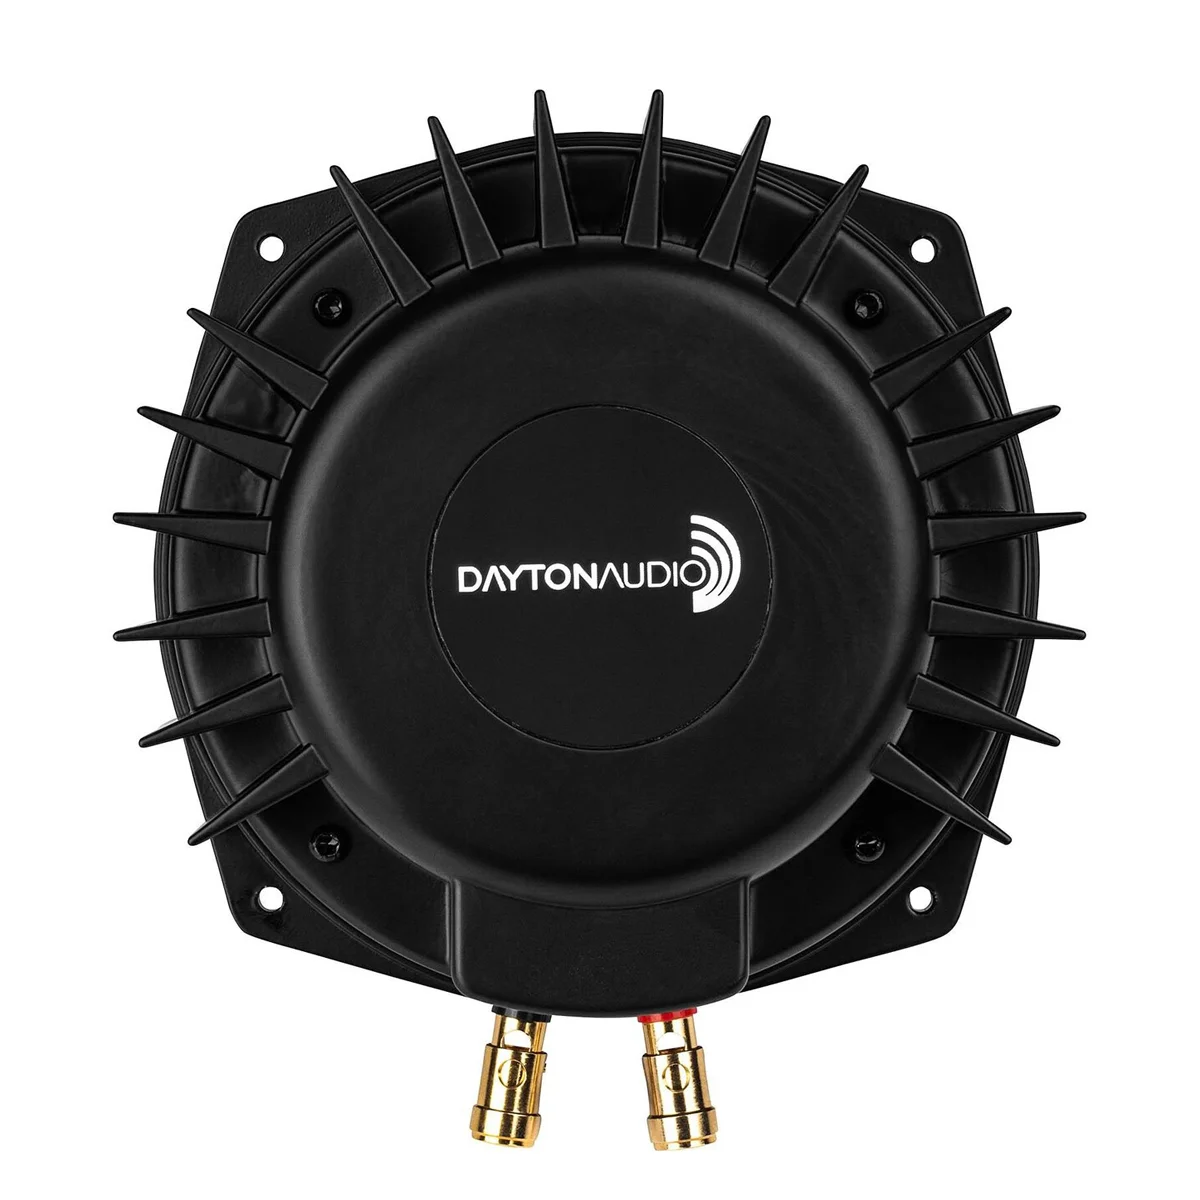 Dispozitive vibratii - Dayton Audio BST-300EX, audioclub.ro